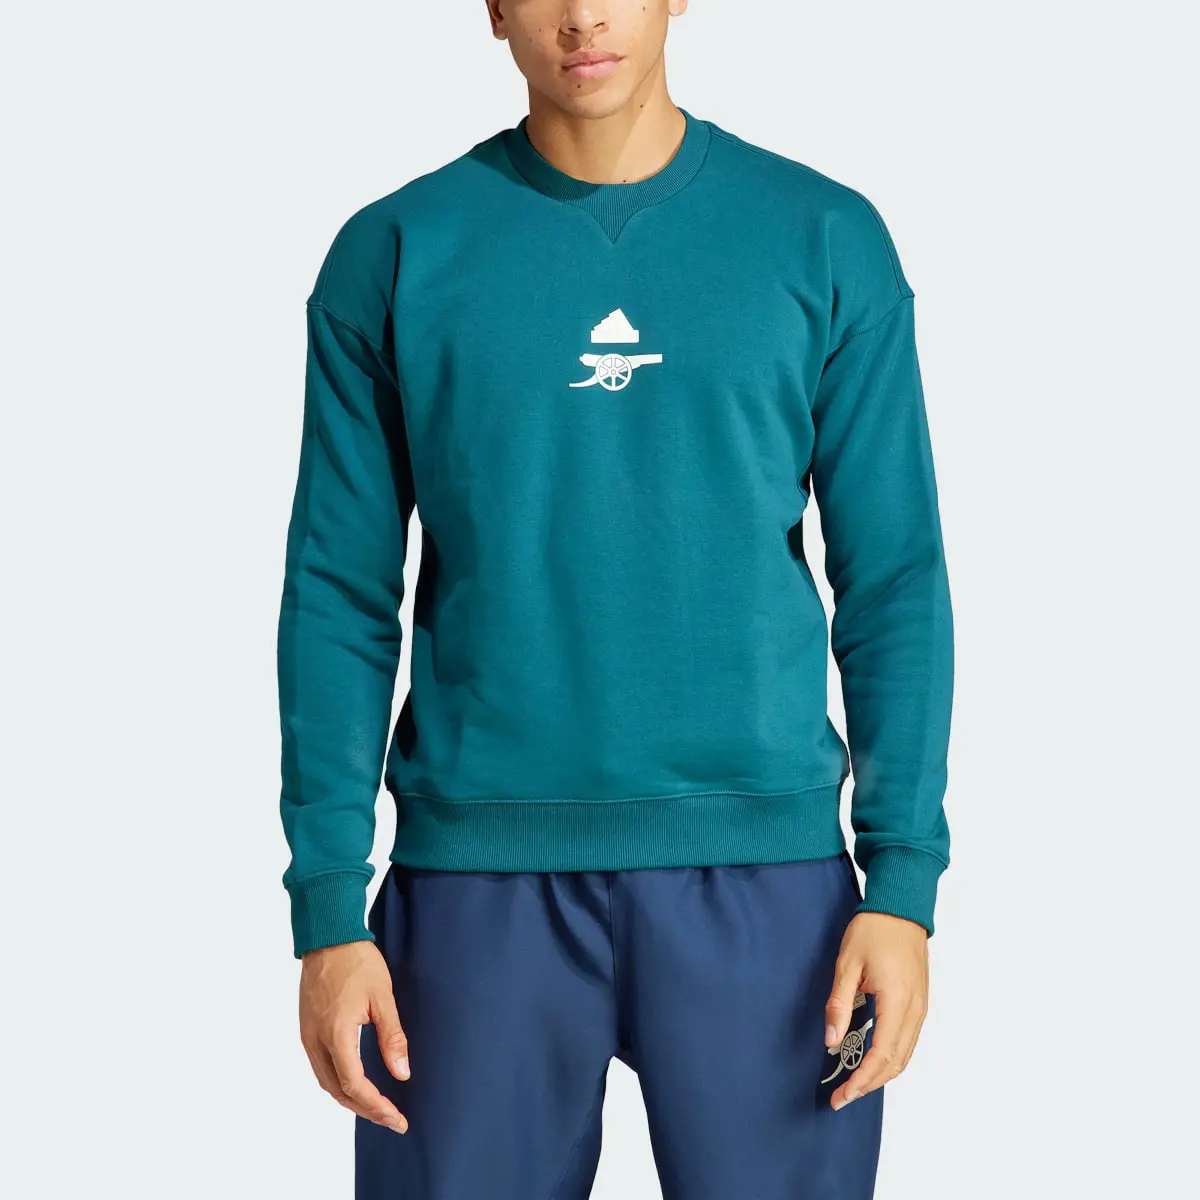 Adidas Sweatshirt de Algodão LFSTLR do Arsenal. 1